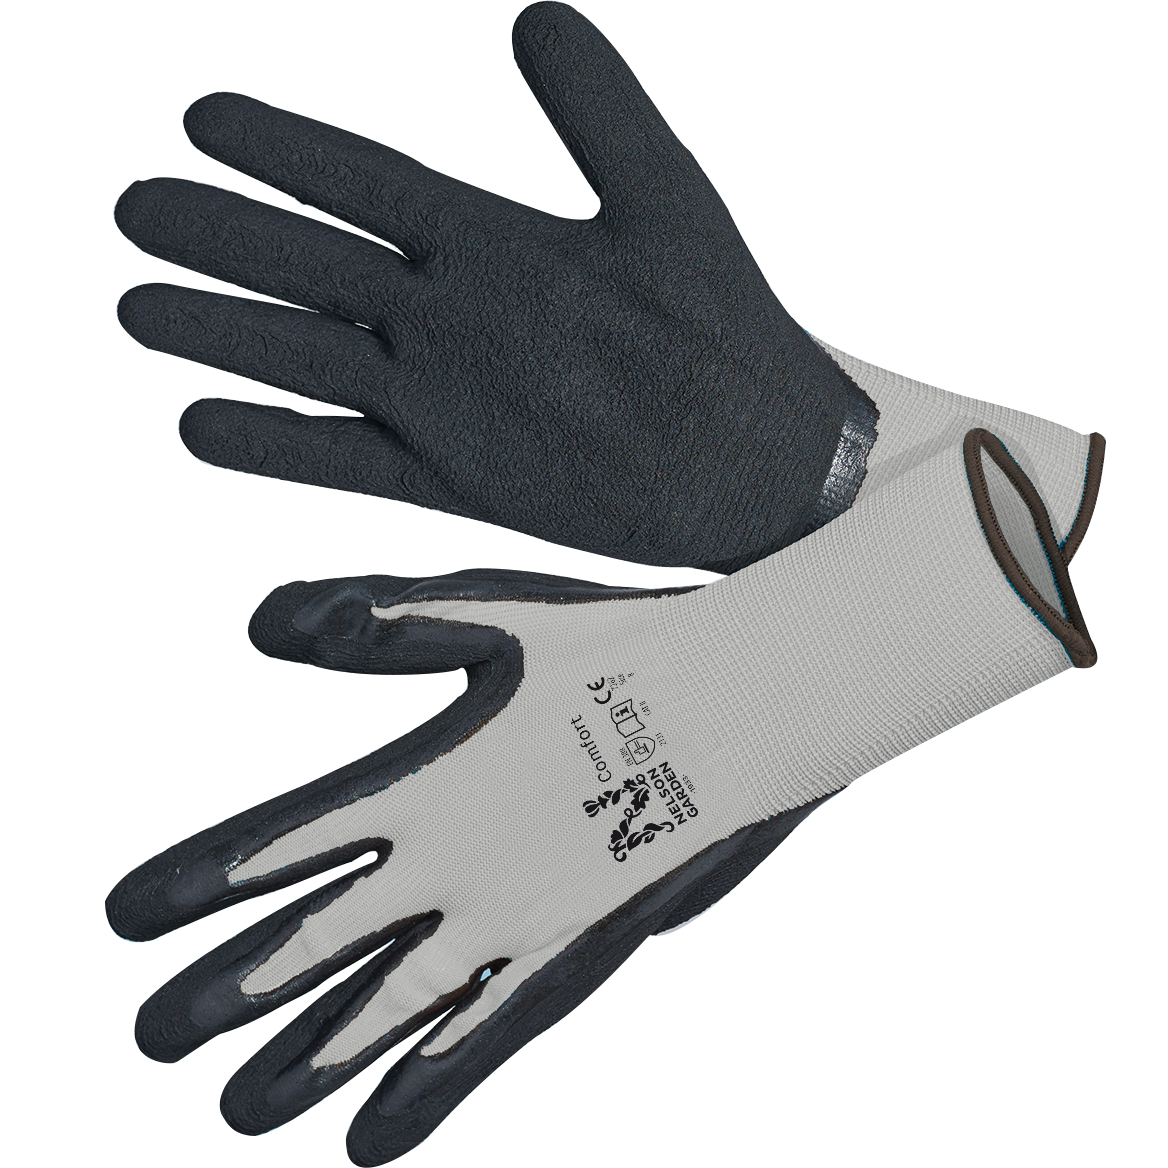 Handske Comfort, grå/svart stl 6